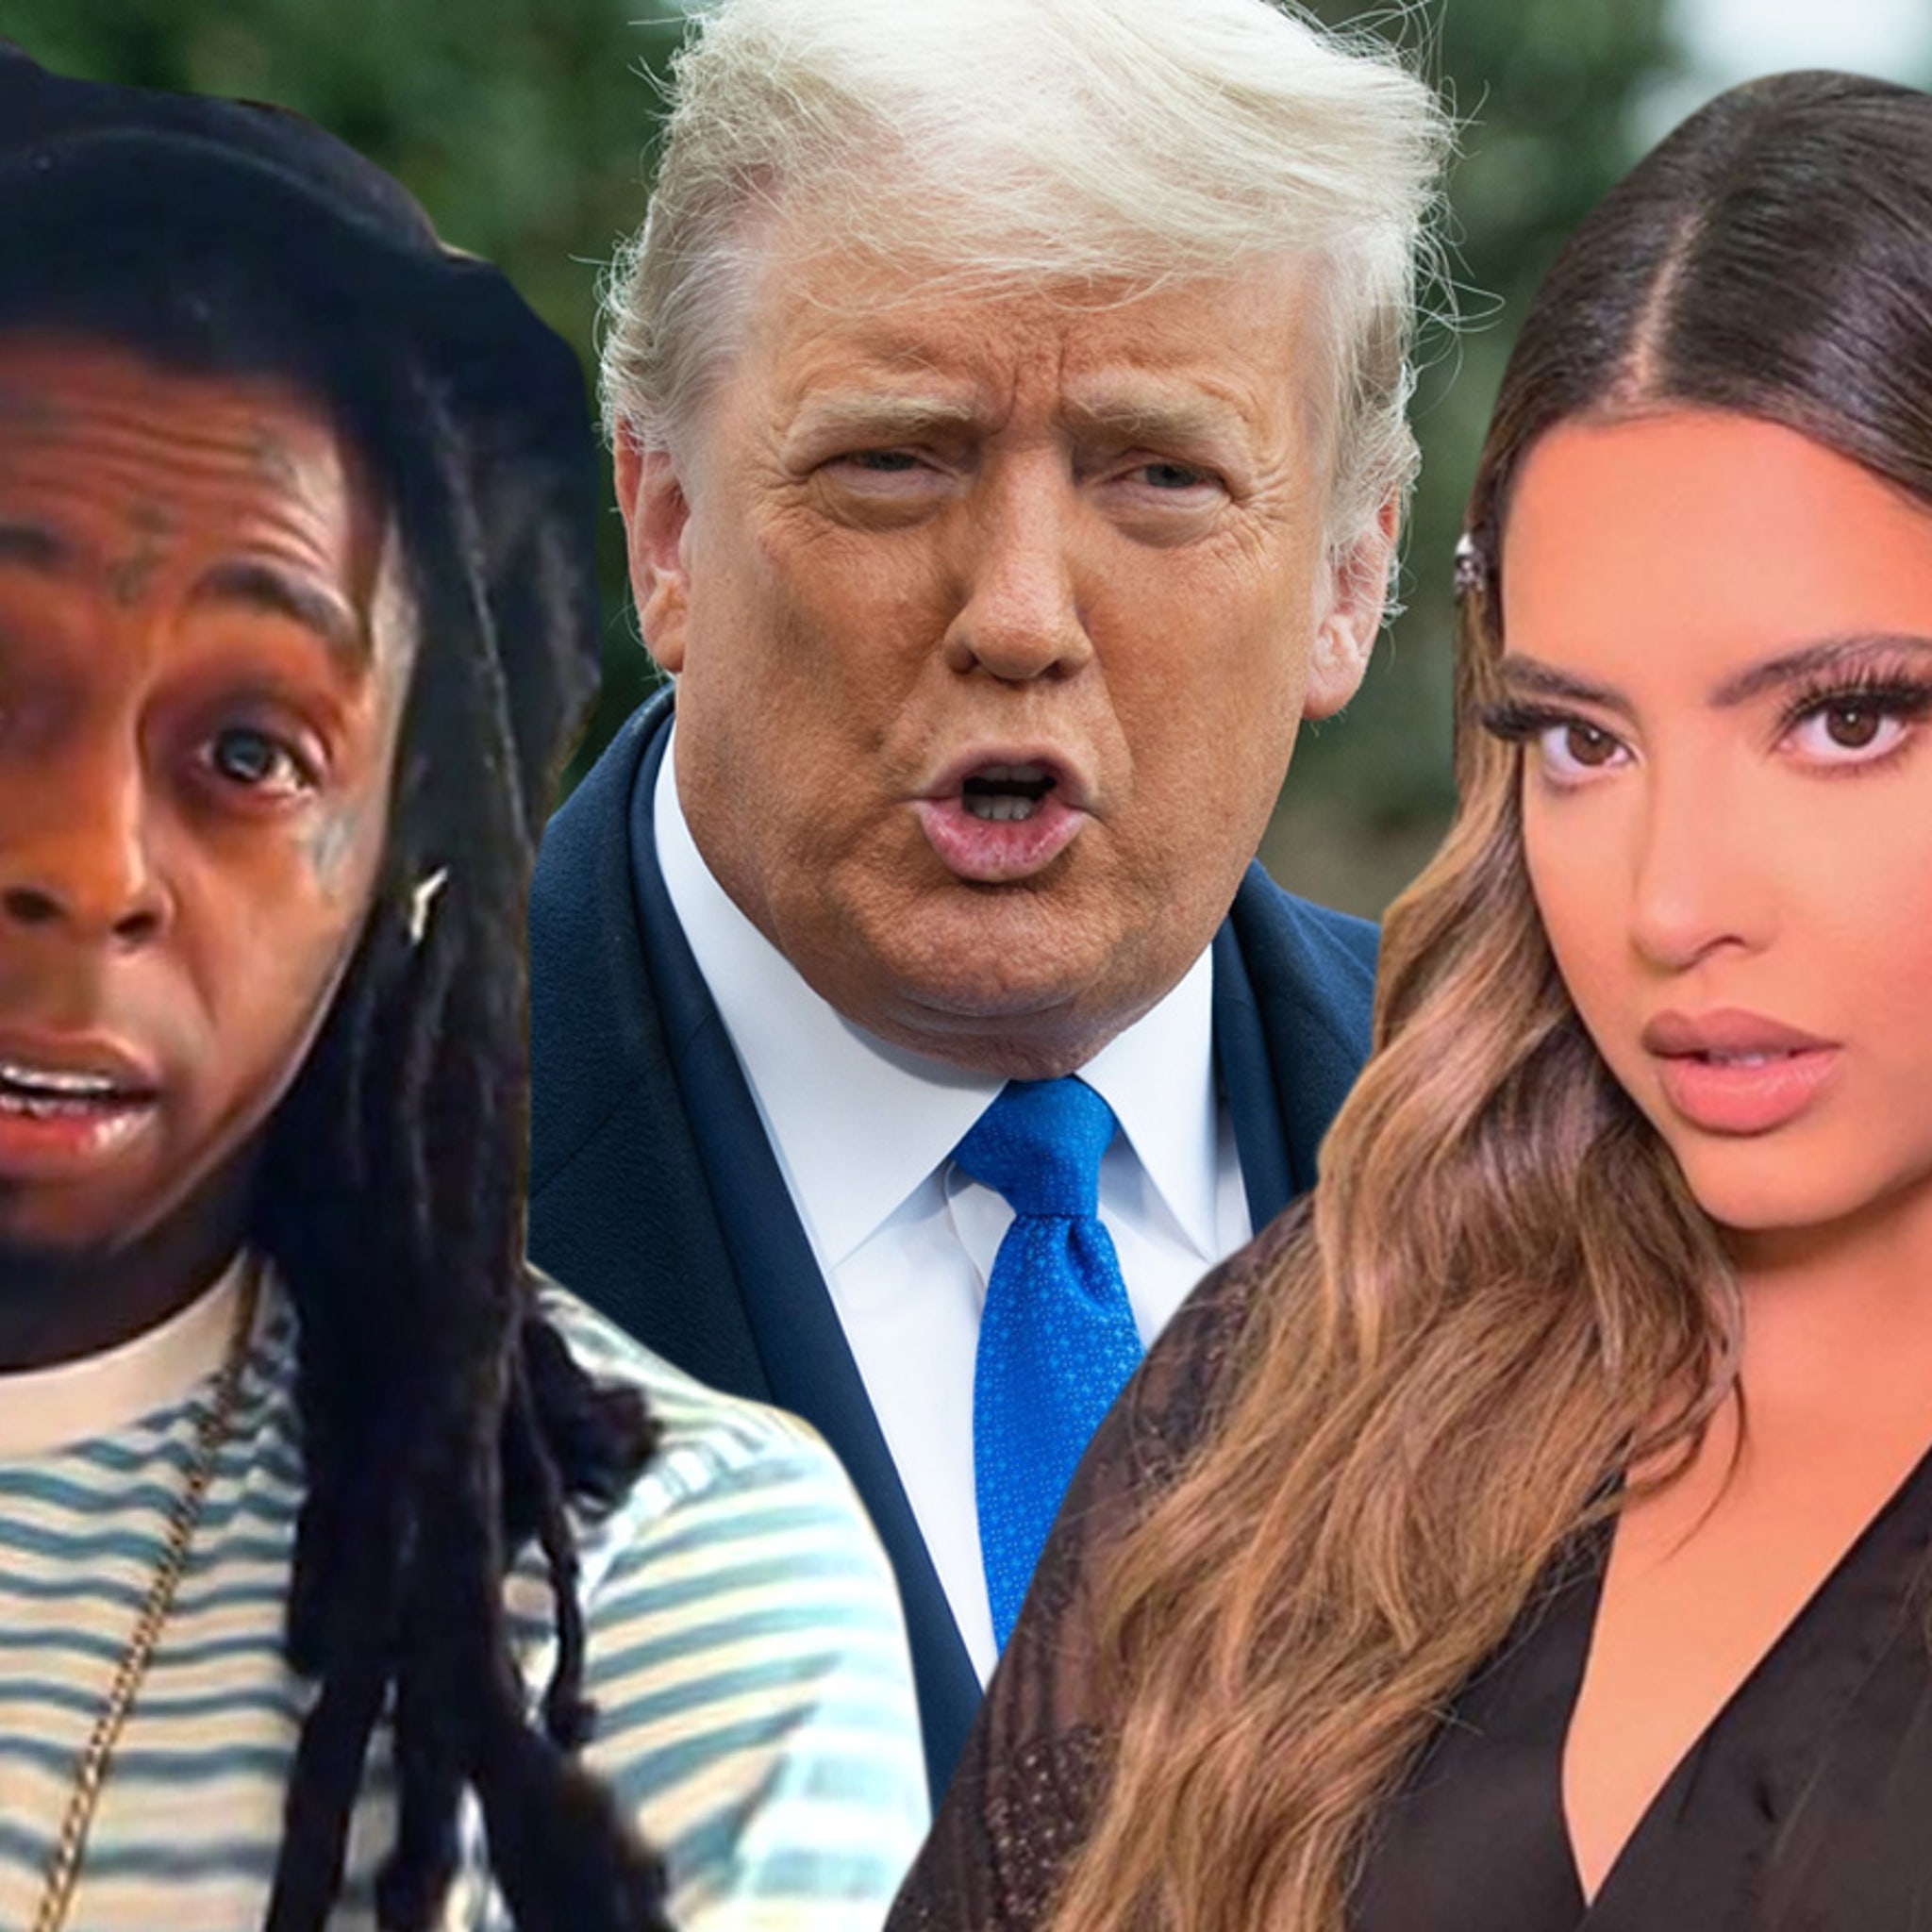 Denise Bidot Sex Video Download - Lil Wayne's Girlfriend Dumps Him, Reportedly Over Trump Endorsement